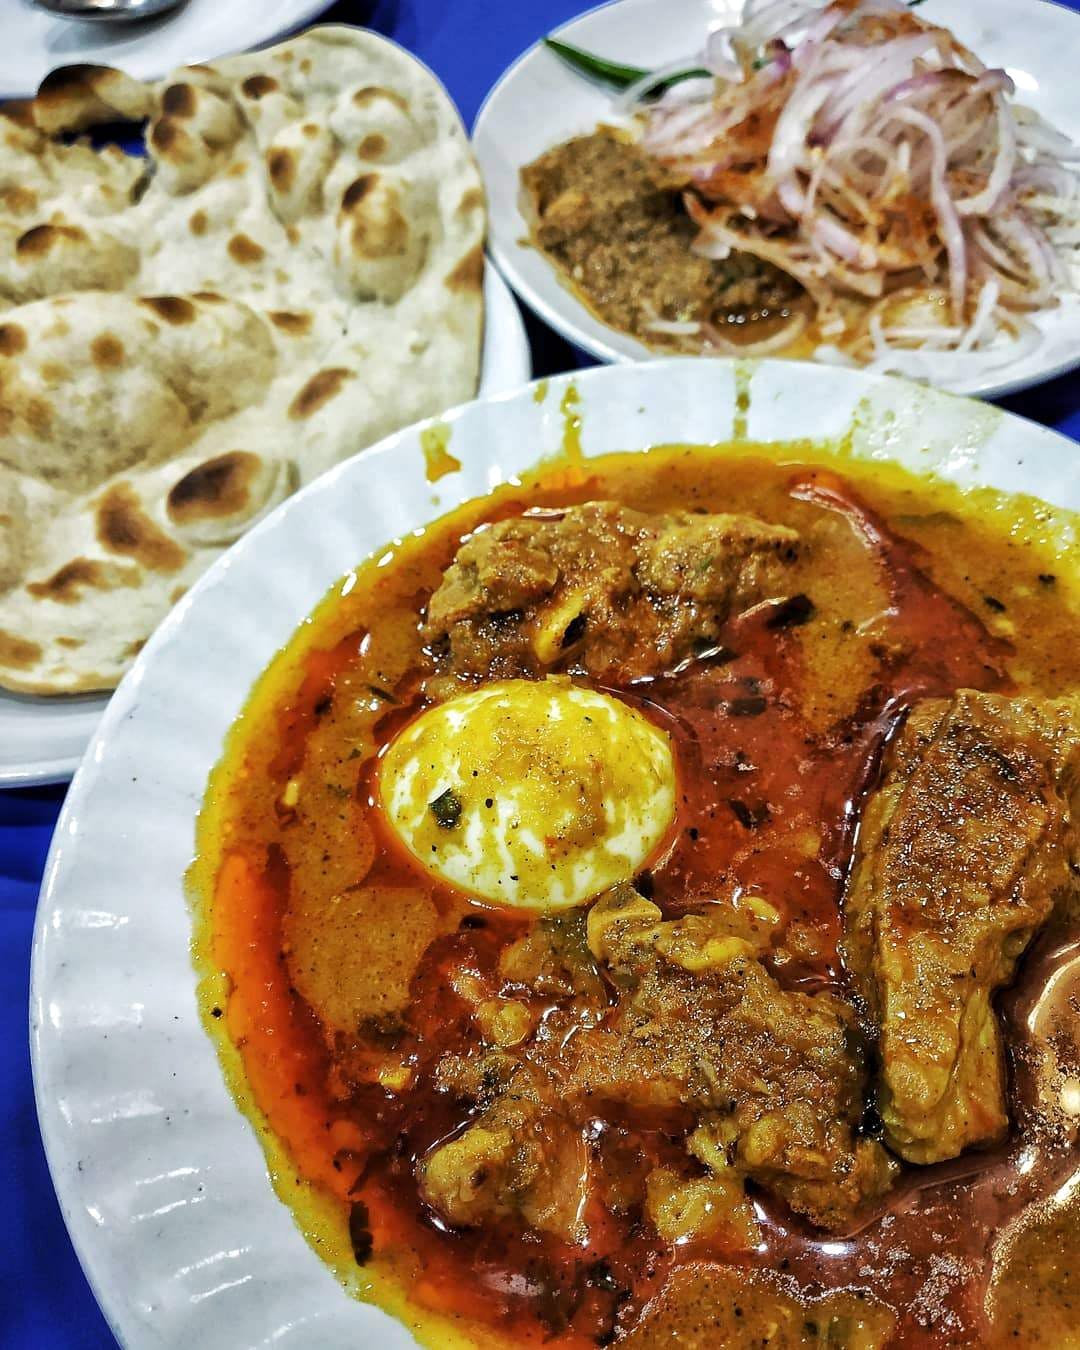 Dish,Food,Cuisine,Naan,Ingredient,Meat,Flatbread,Produce,Curry,Staple food